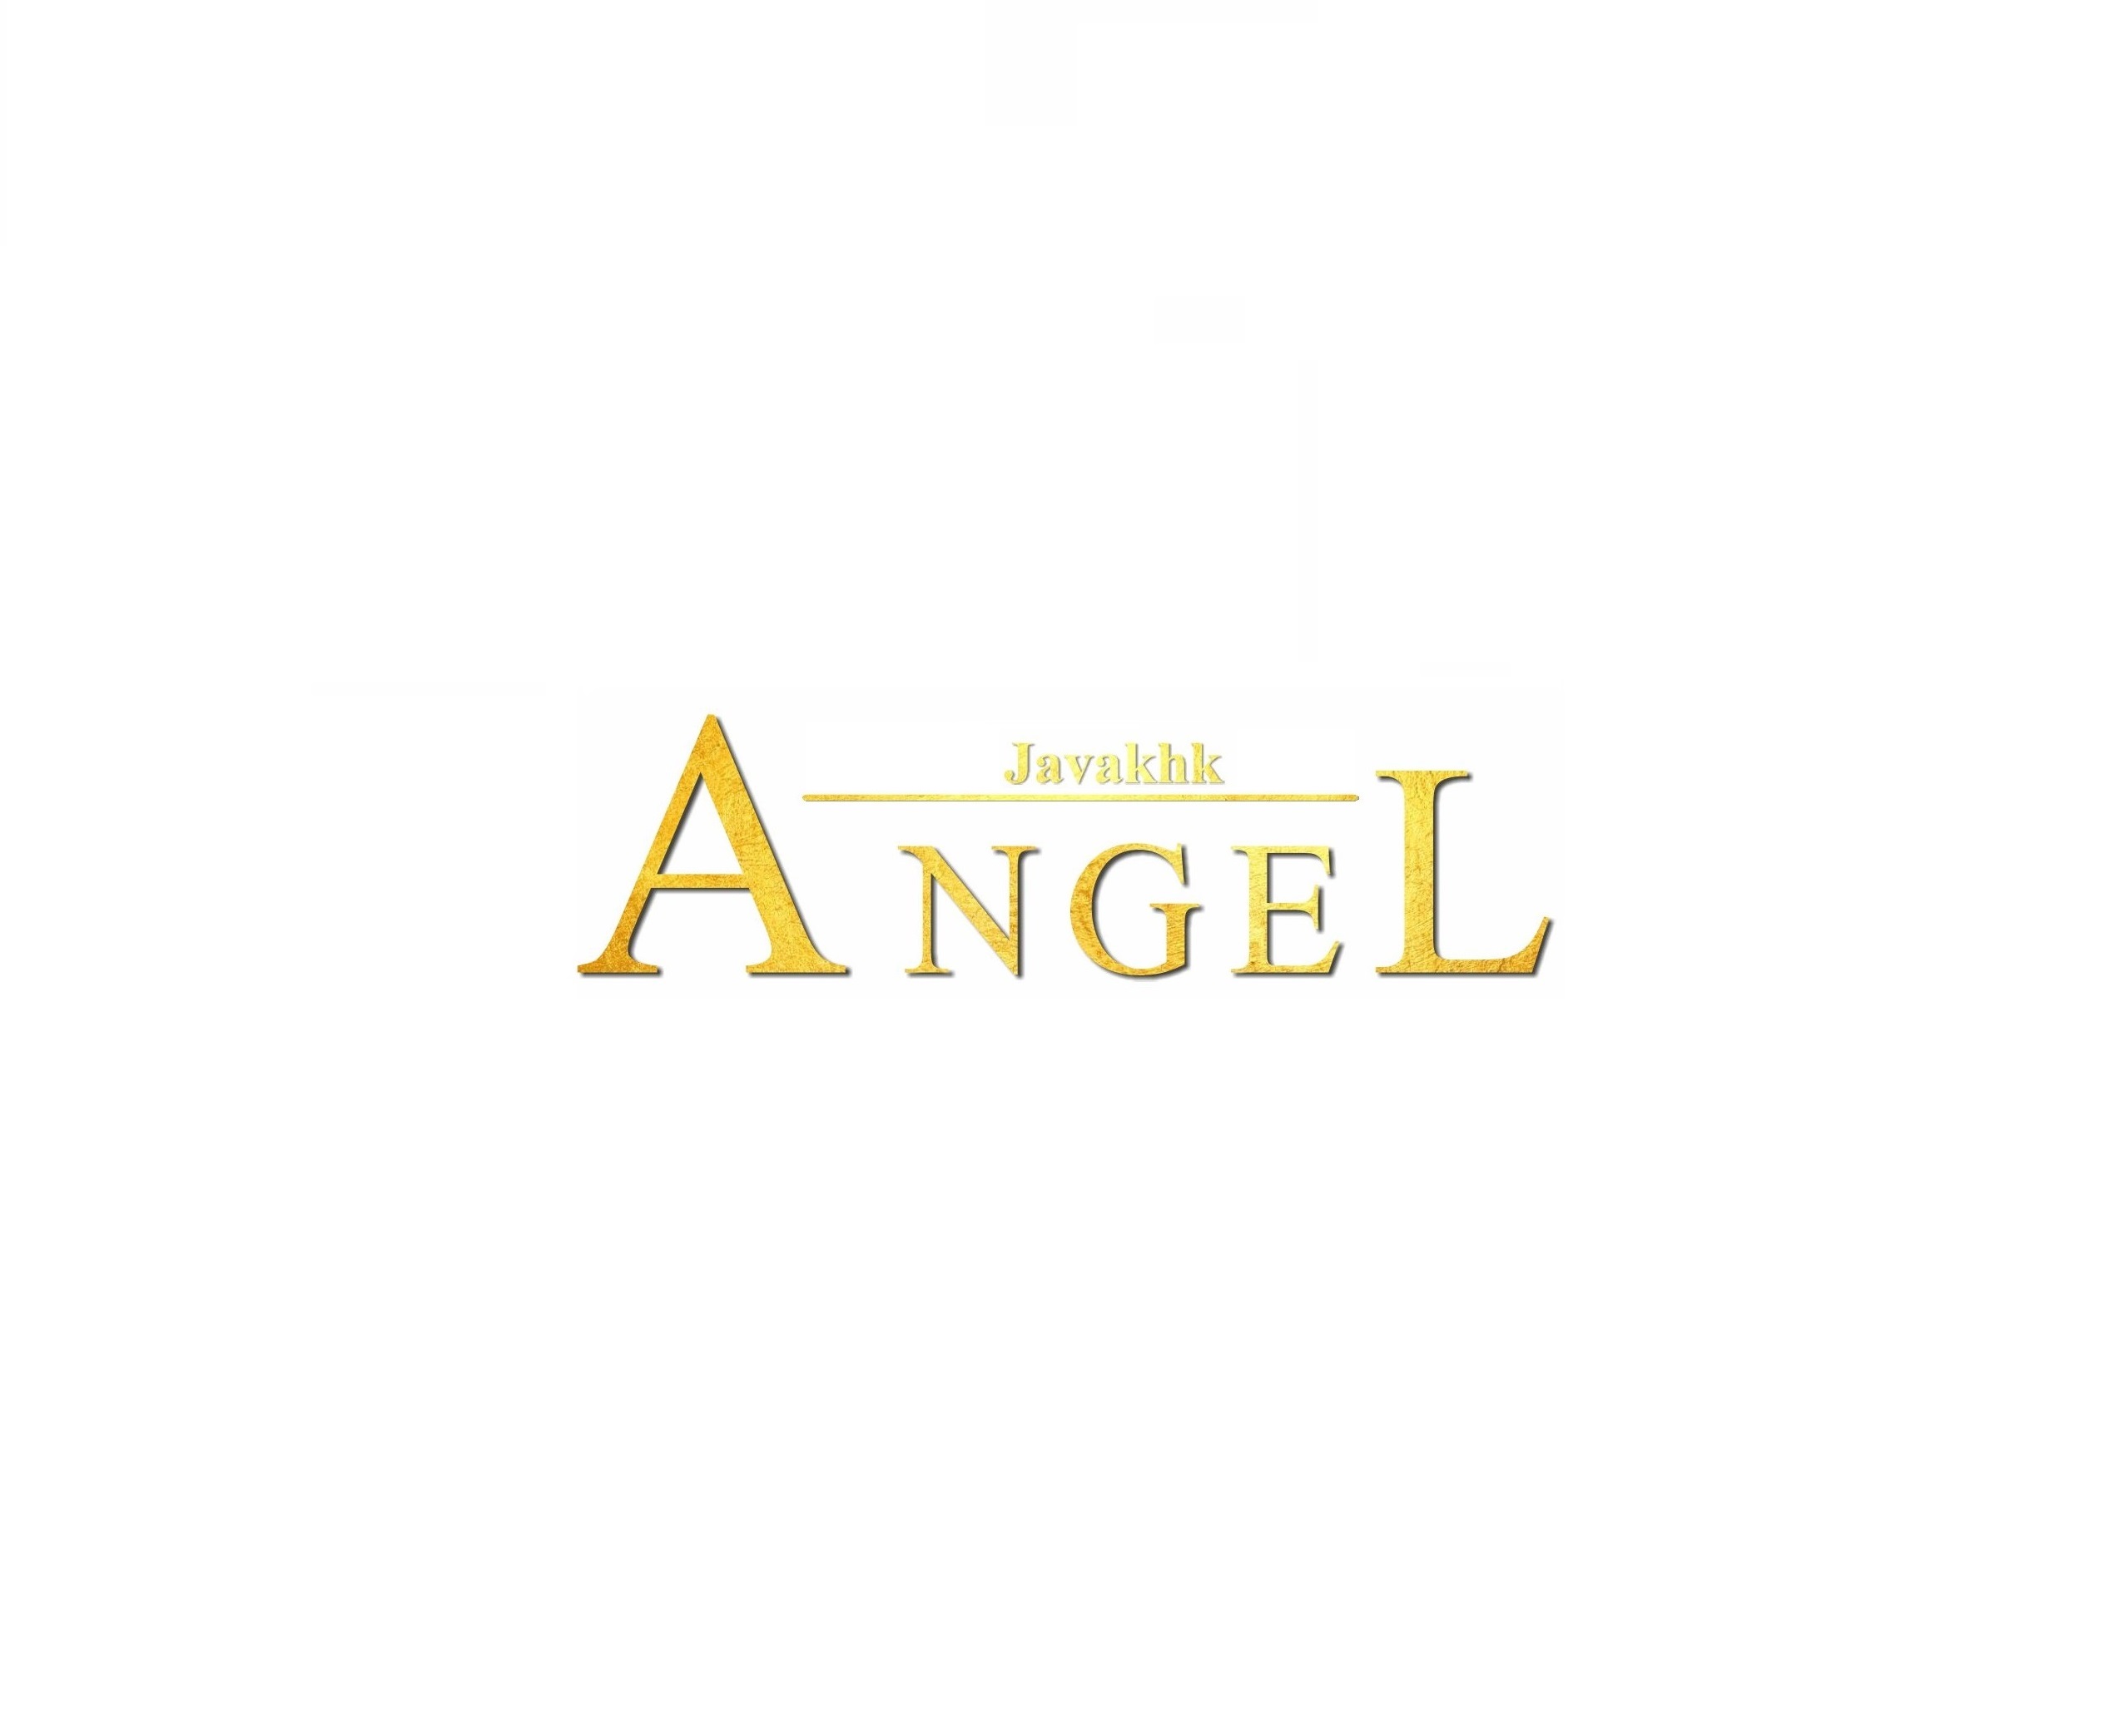 Angel- Ангел